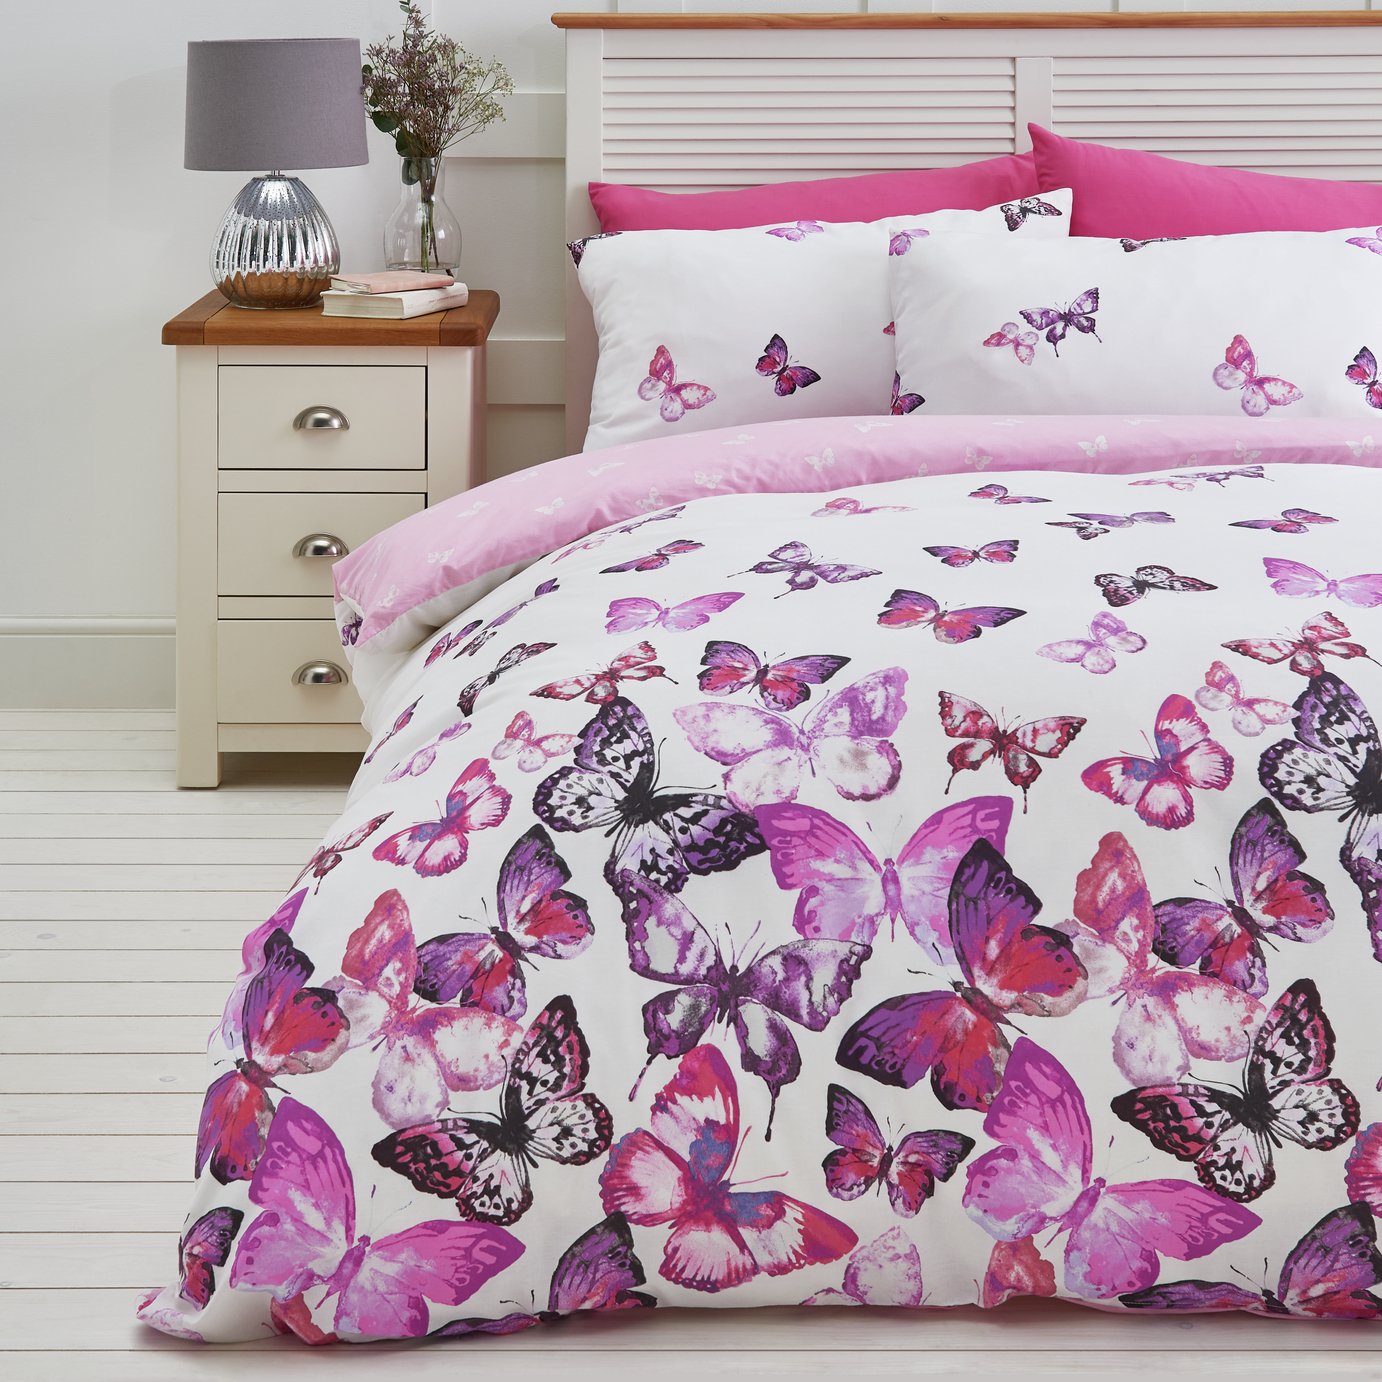 Argos Home Trailing Butterflies Pink Bedding Set - Single